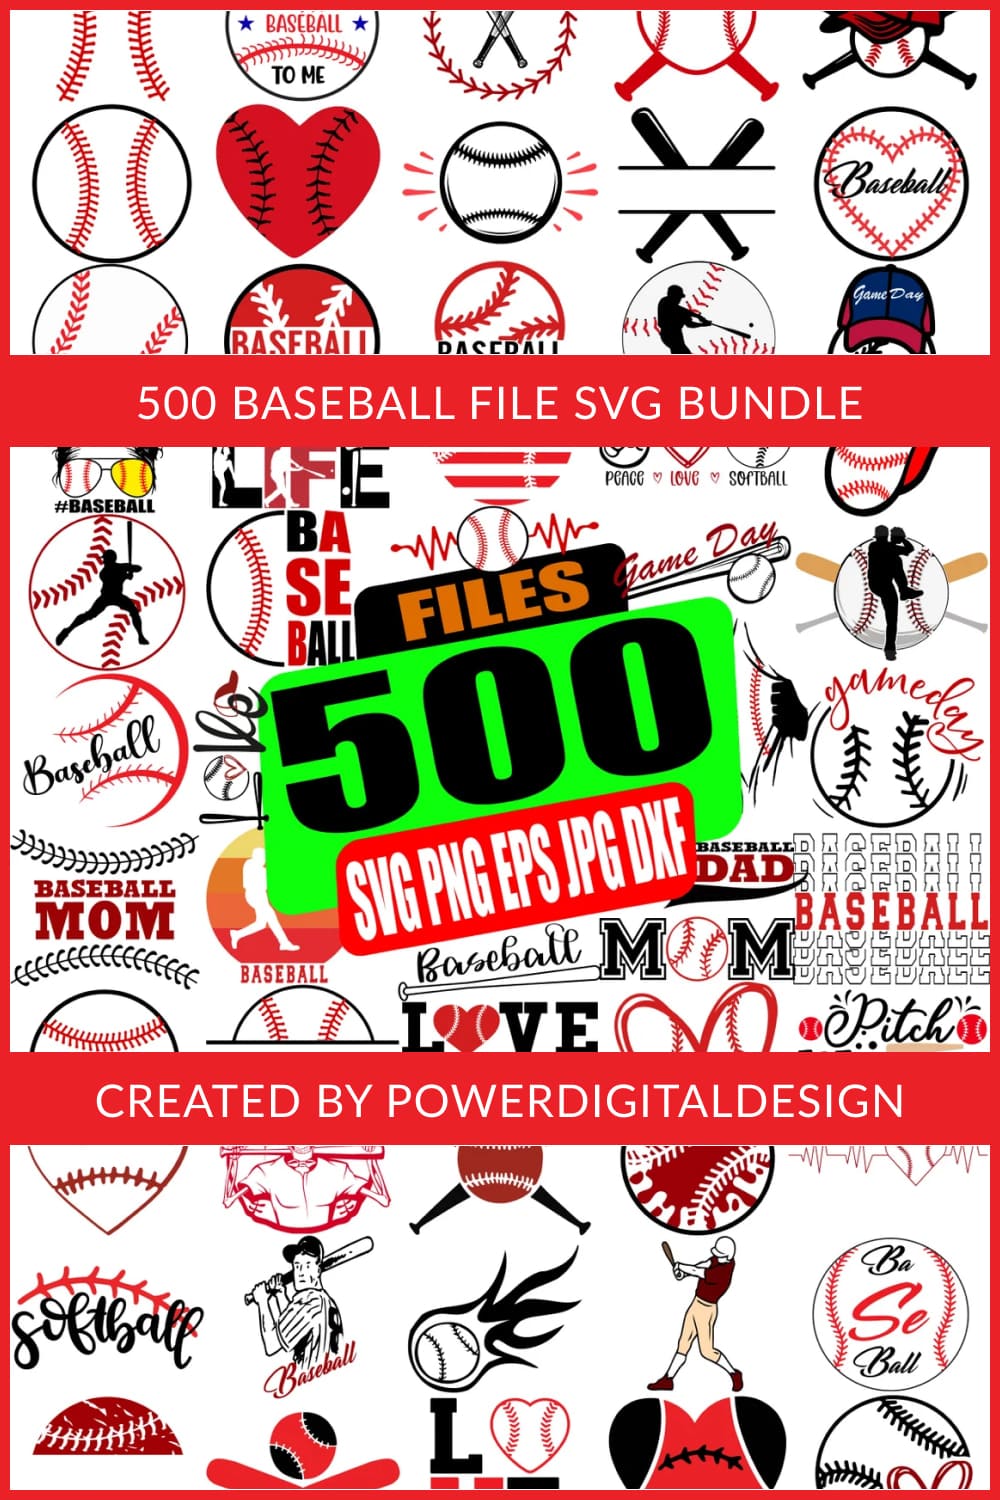 01 500 baseball file svg bundle pinterest